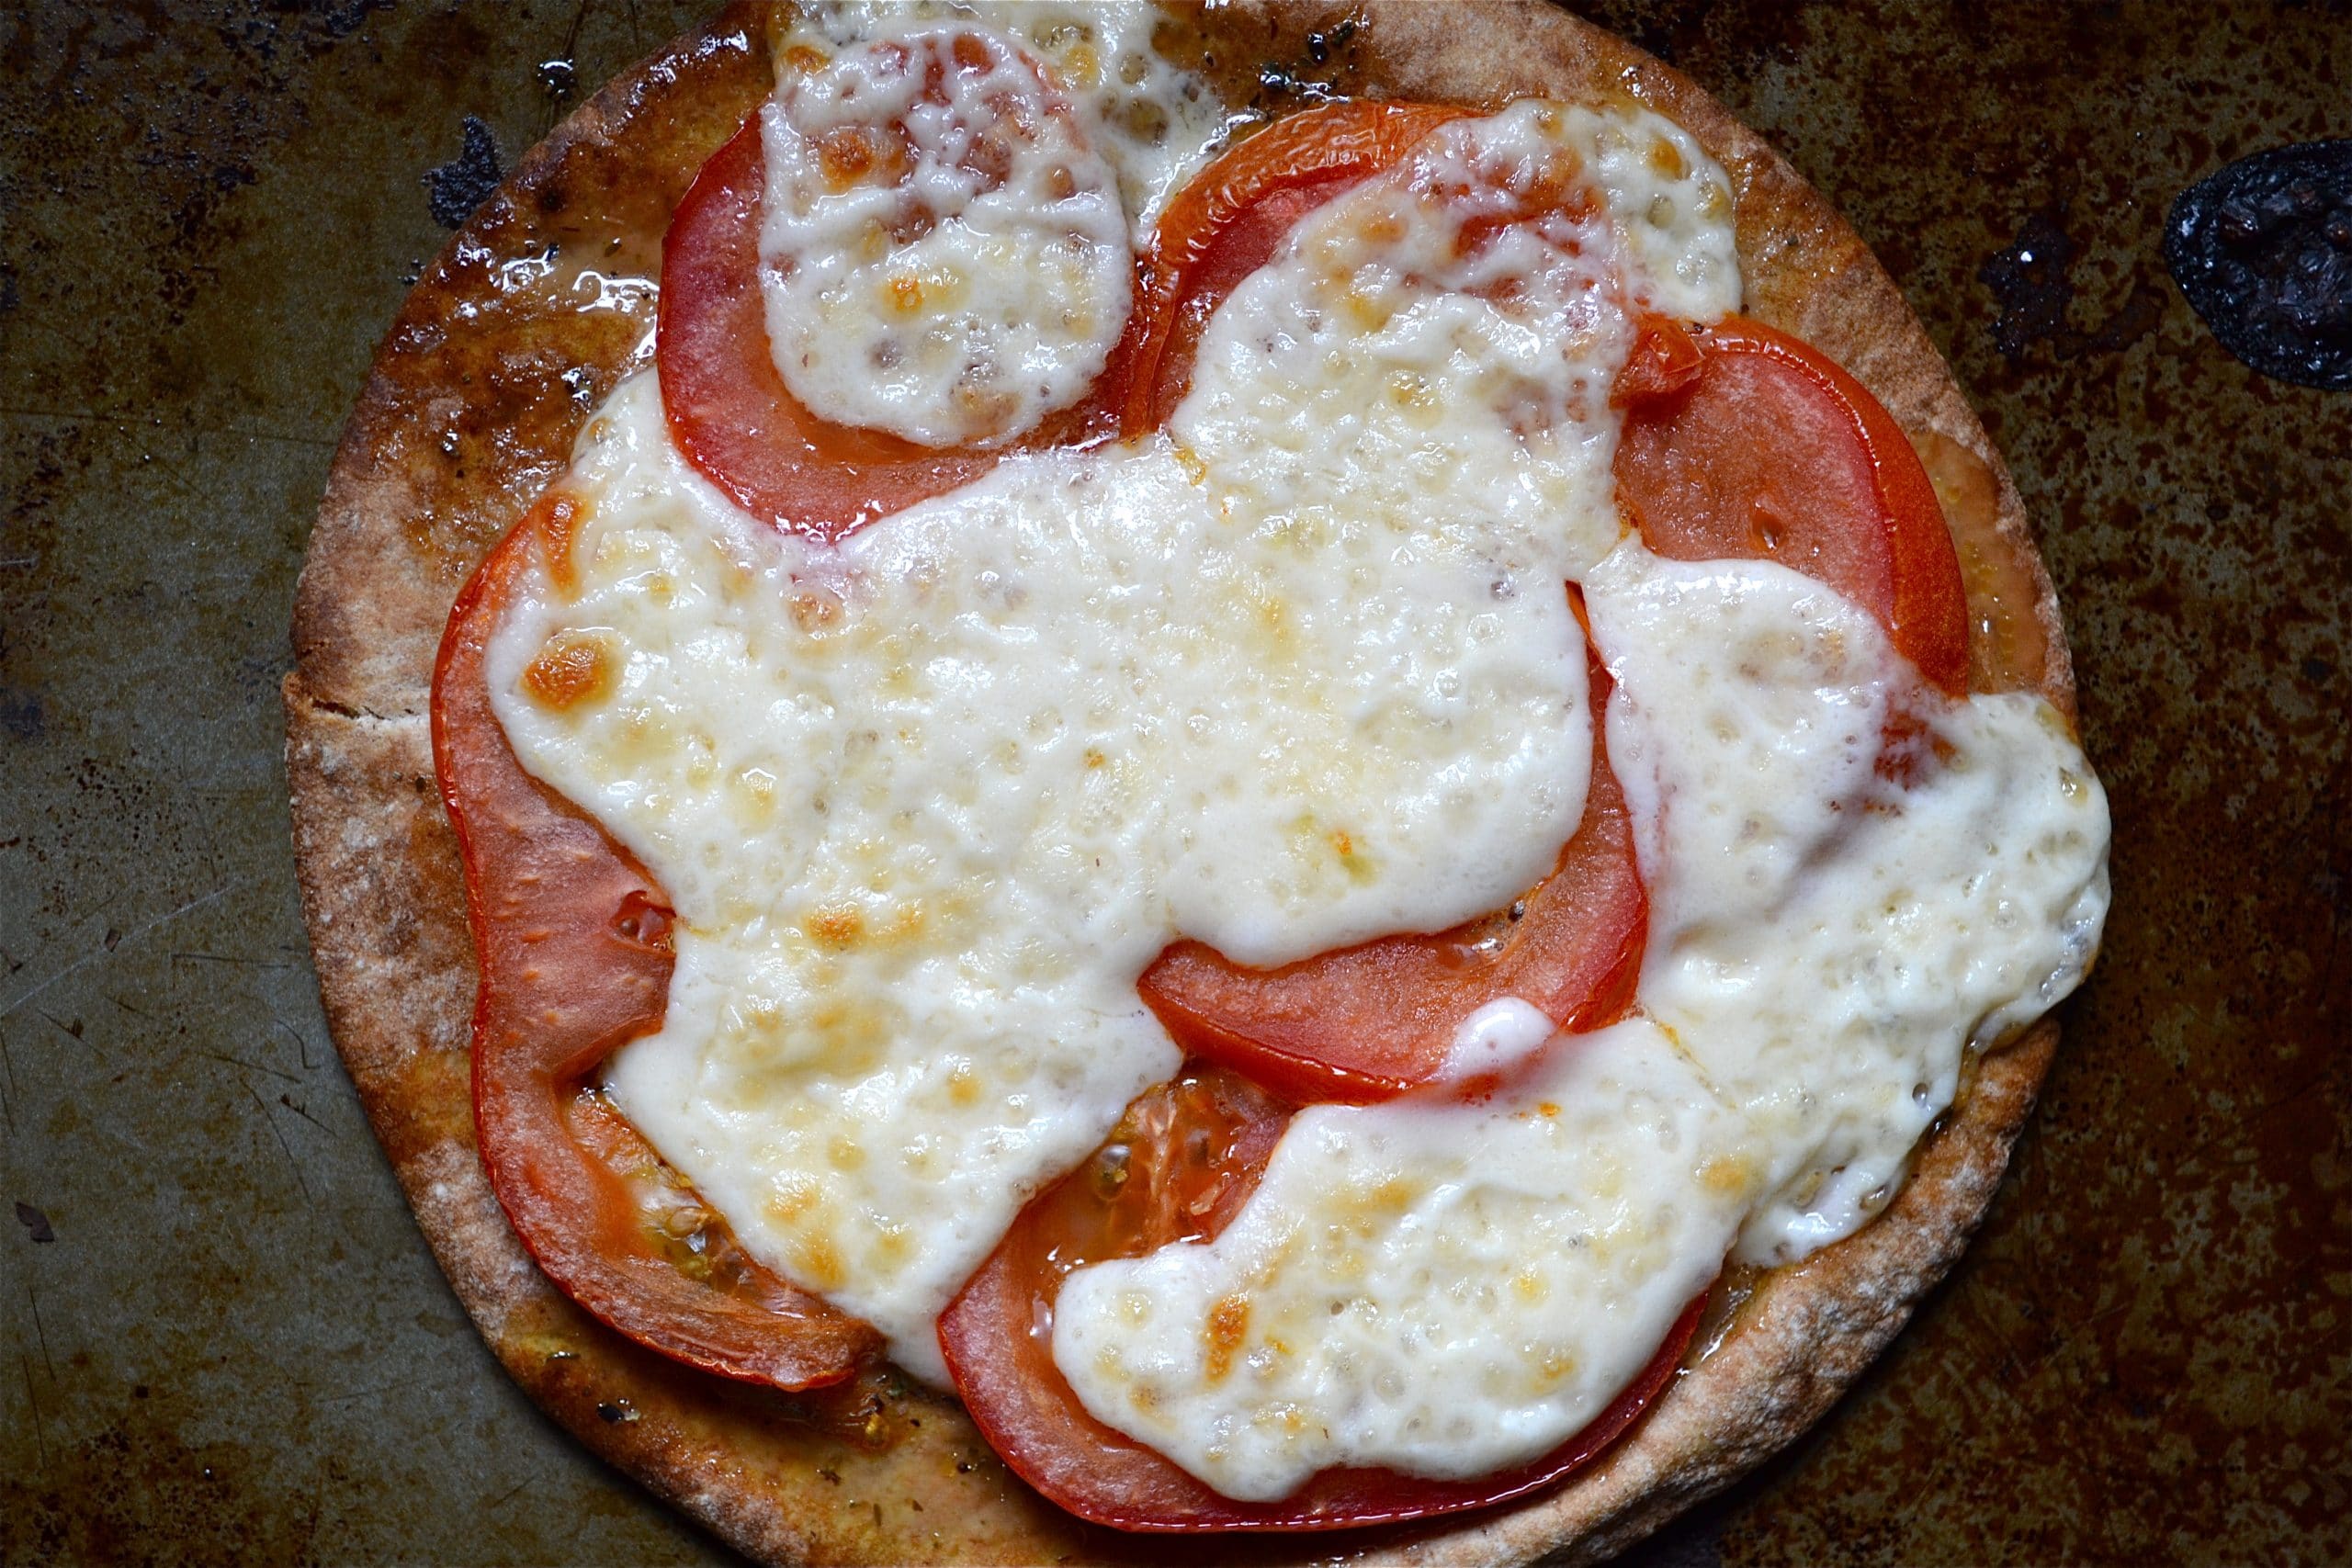 Quick and Easy Classic Pita Pizza - Gluten Free Option